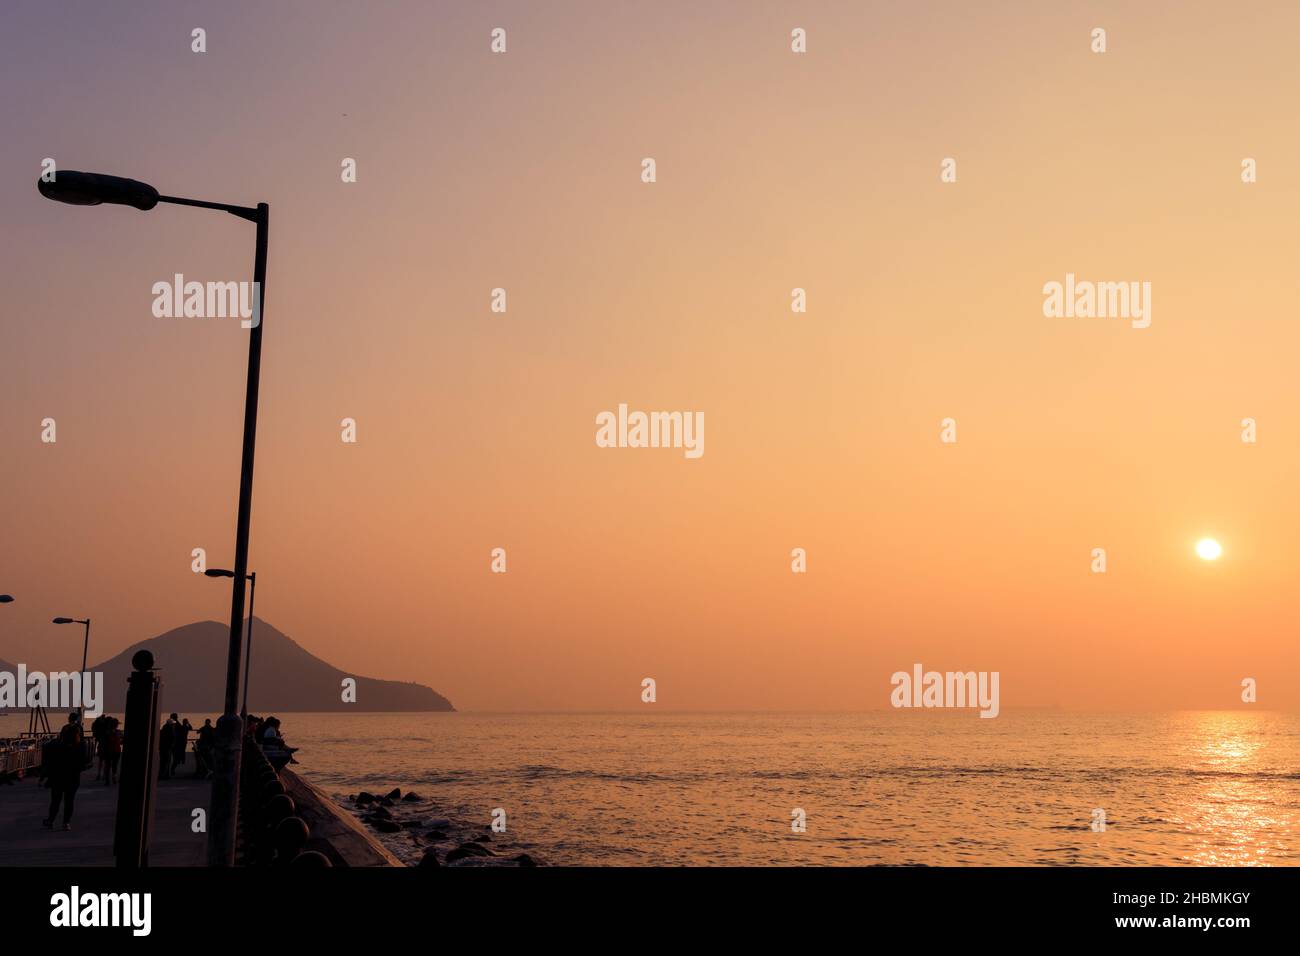 Hongkong changzhou island sunset beach golden view Stock Photo